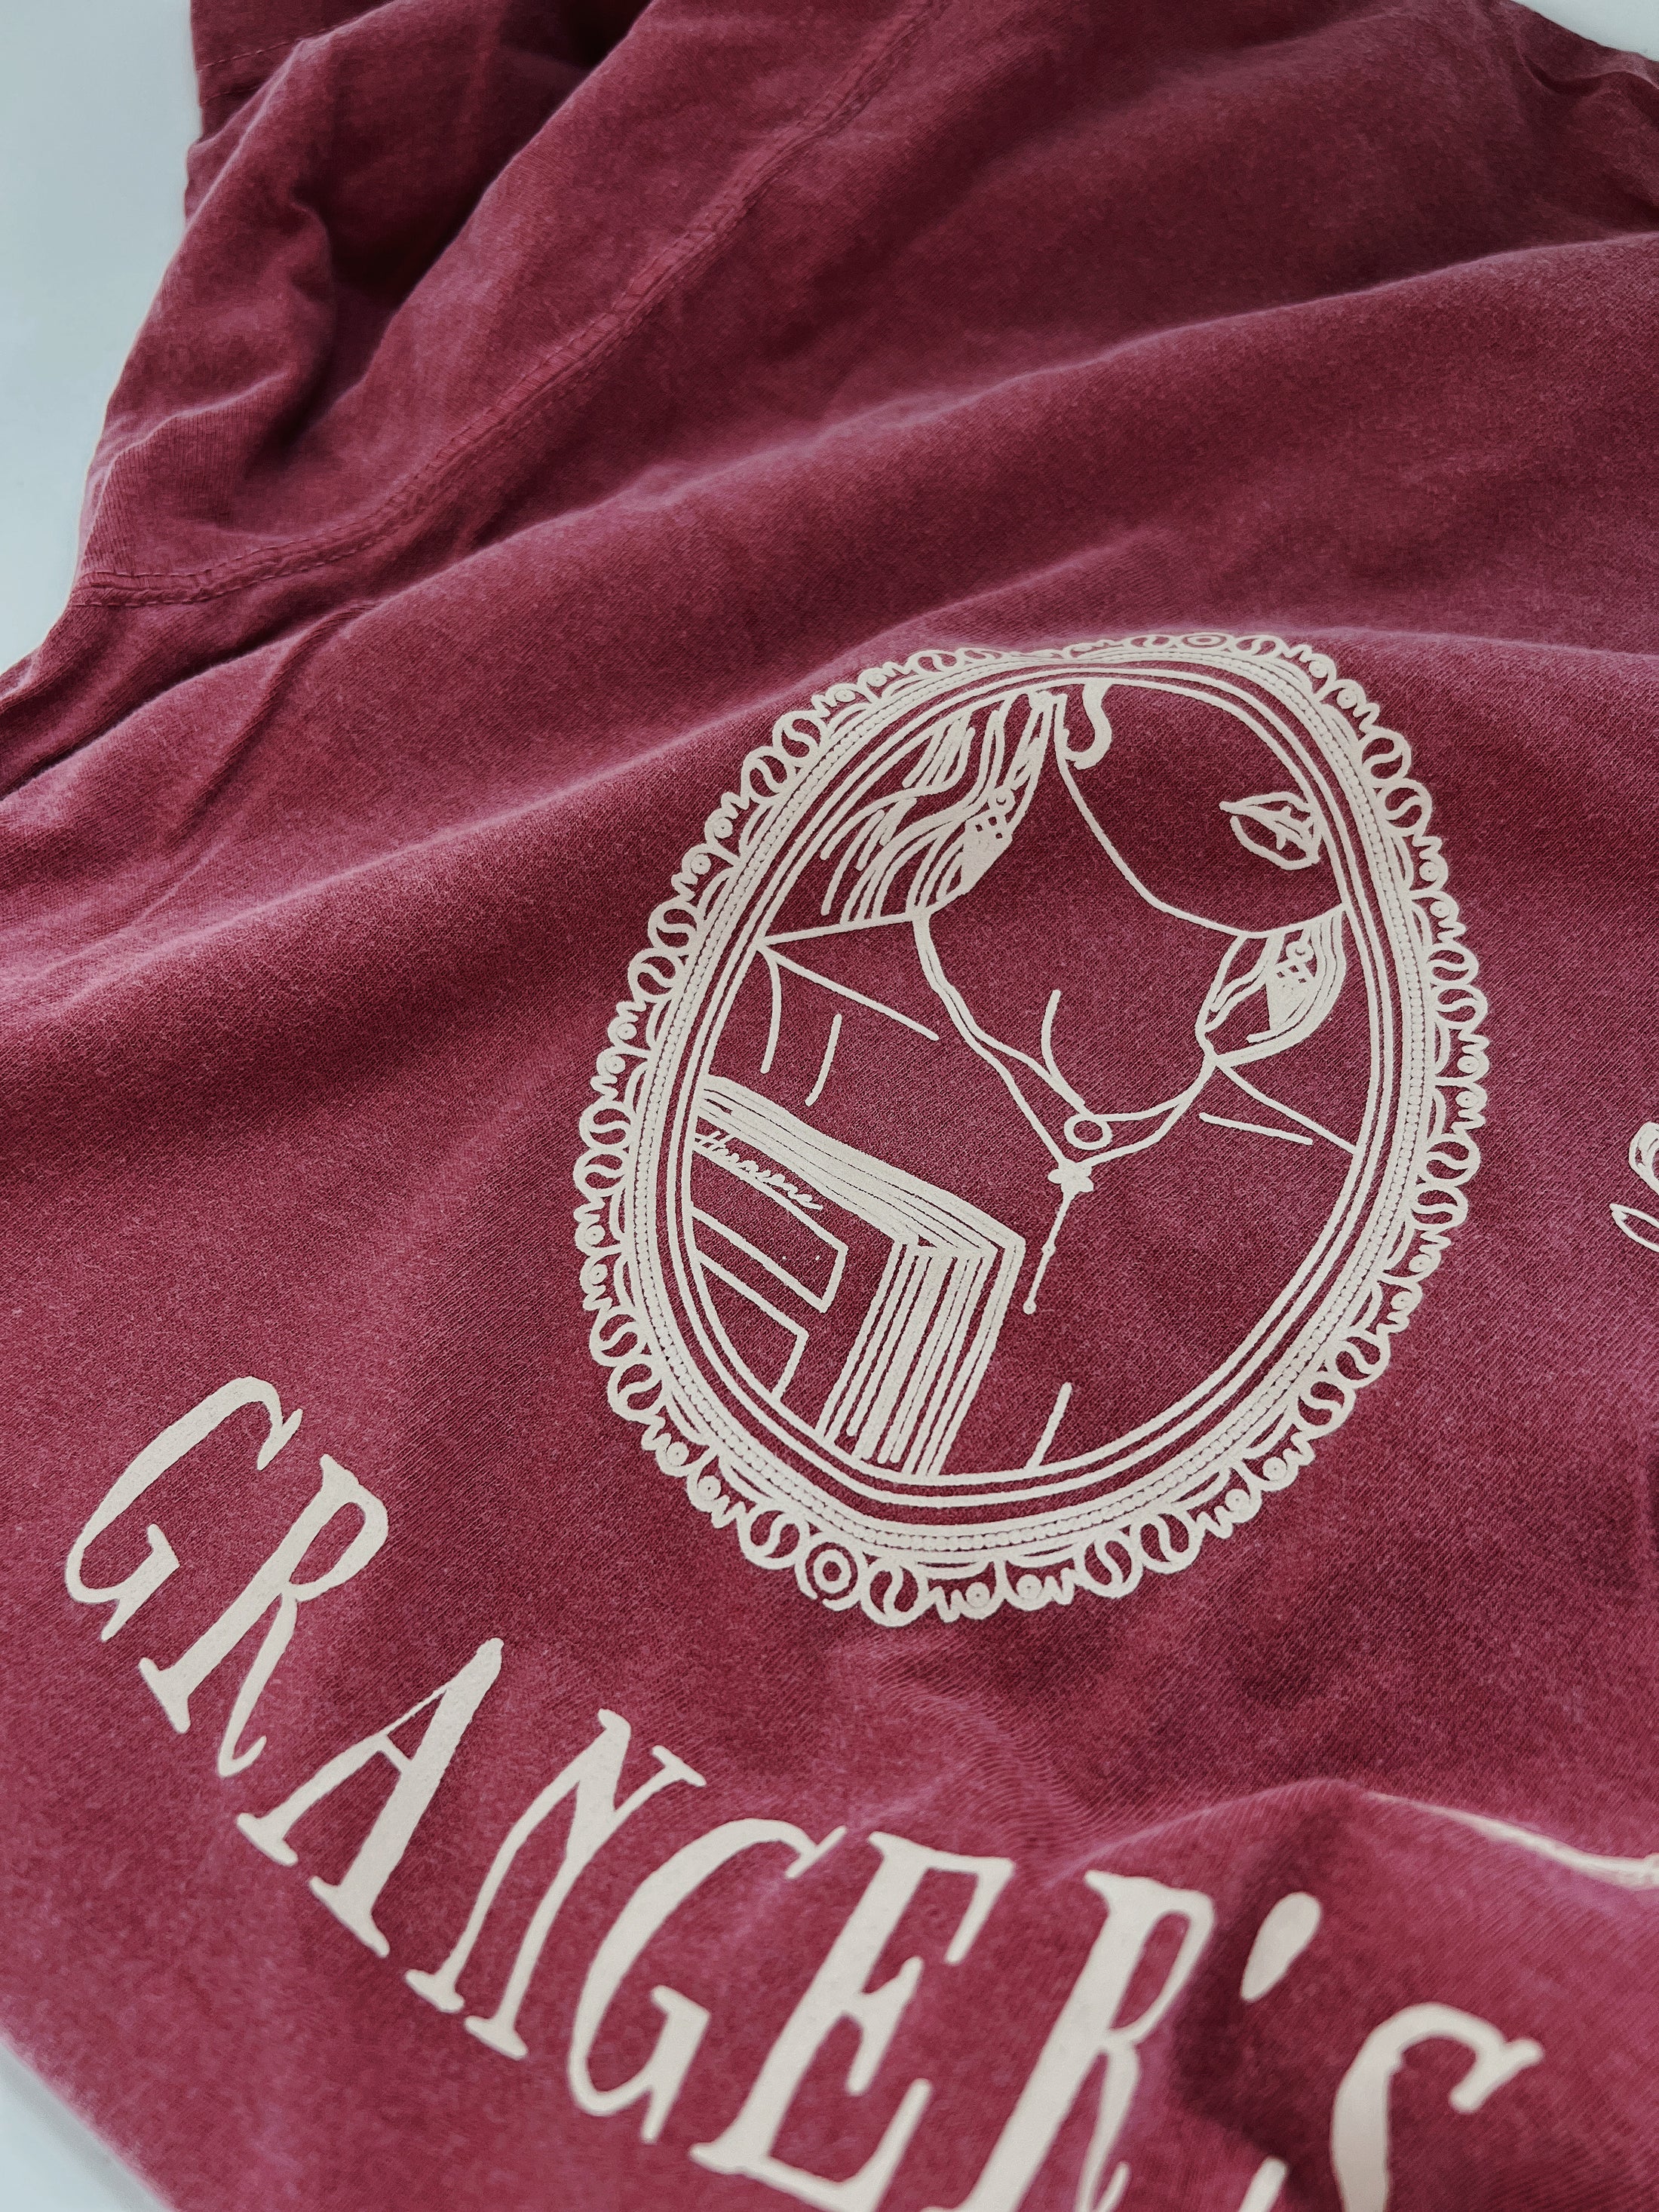 Granger's Book Club Garment Dyed Tee